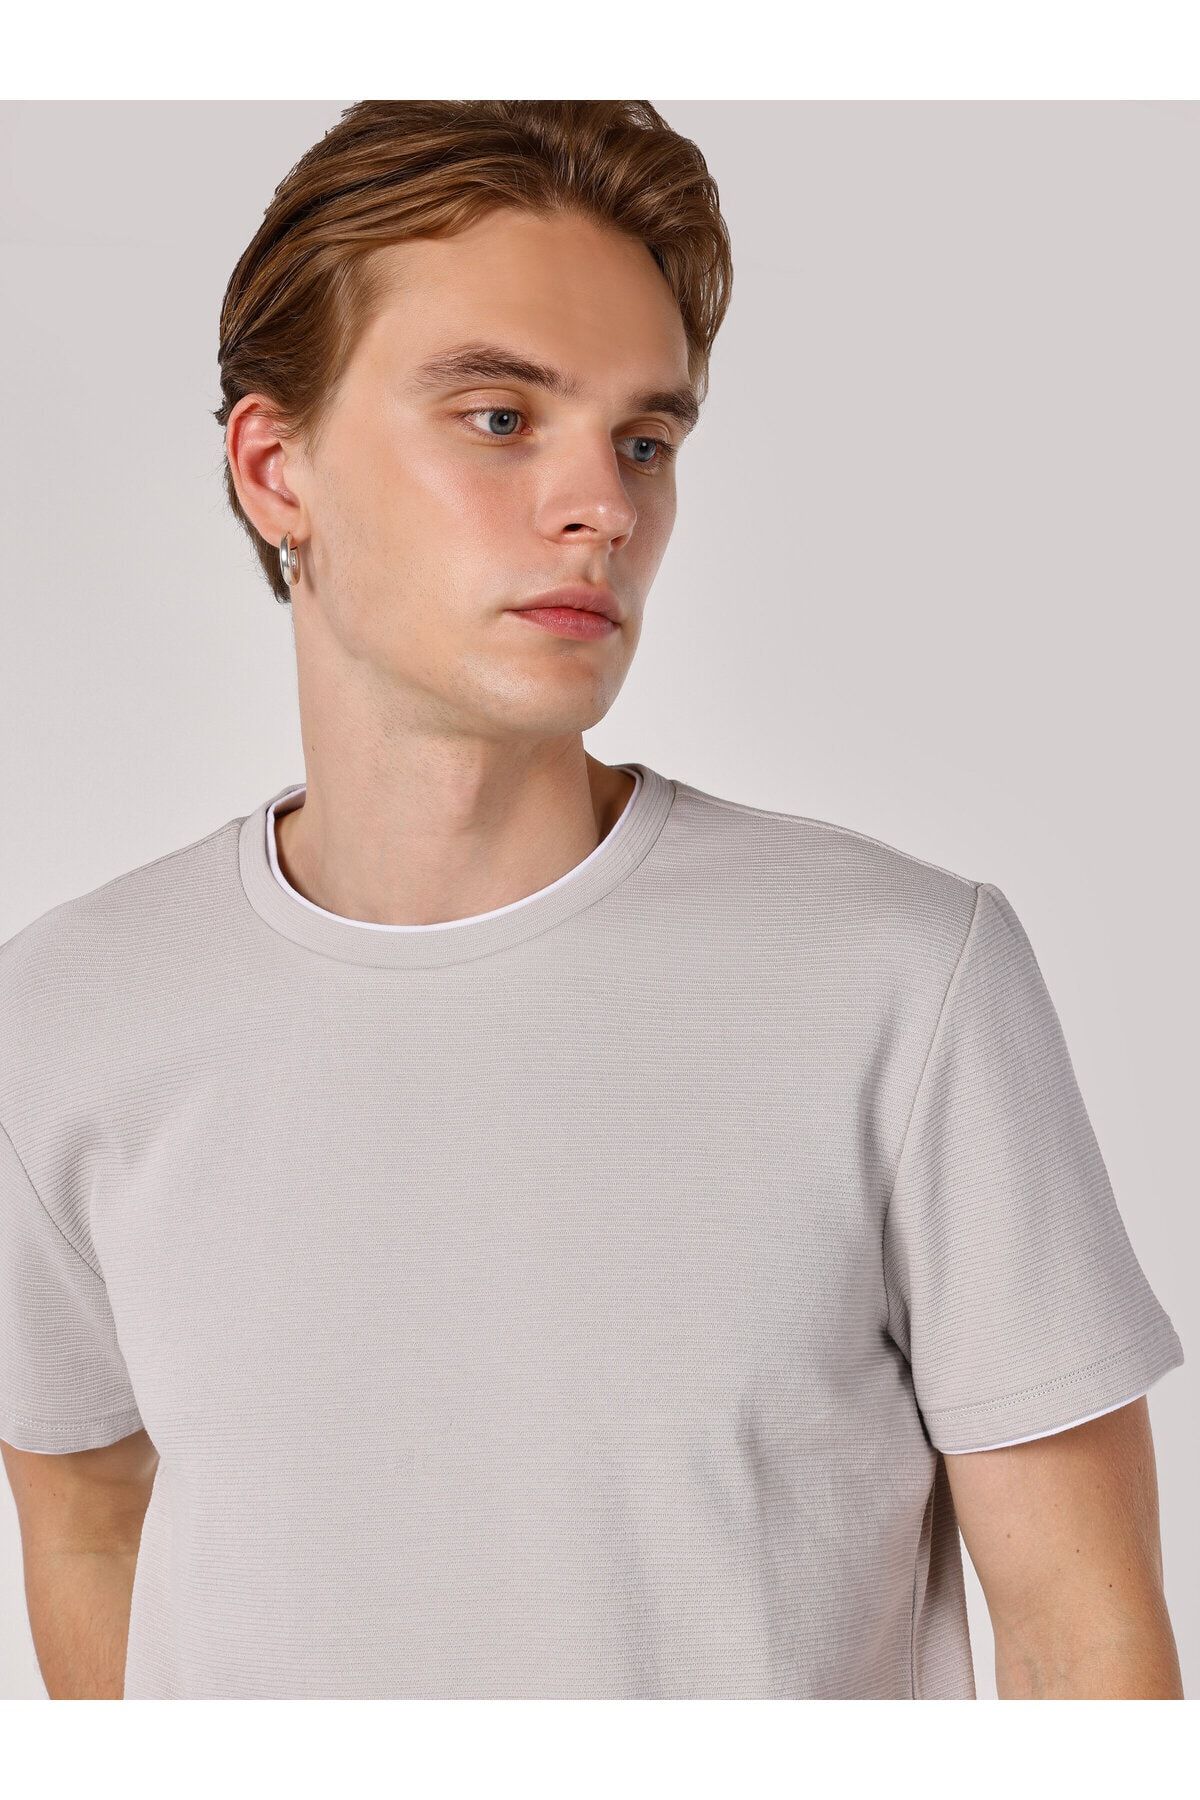 Colin’s گردن دوچرخه مناسب به طور منظم آستین کوتاه مردانه خاکستری T shirt